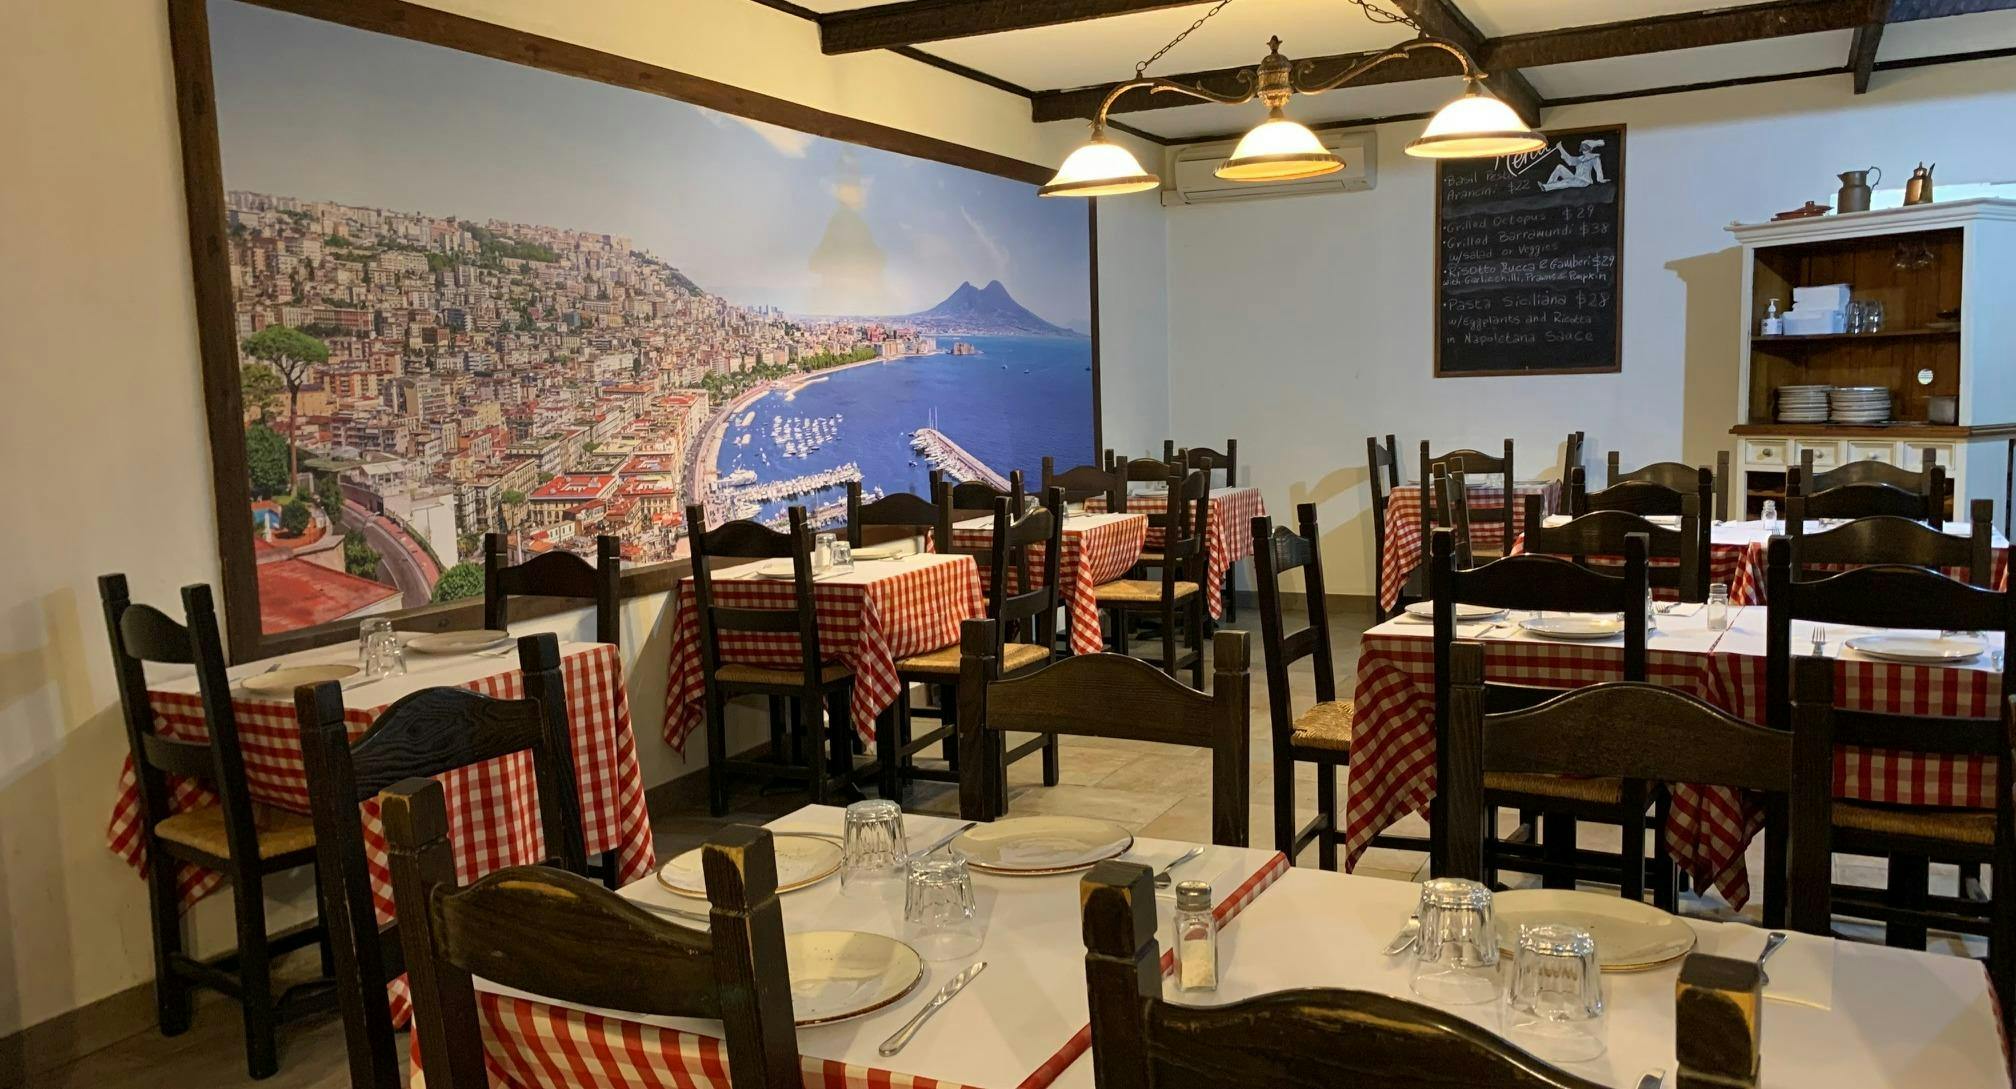 Photo of restaurant Napoli in Bocca in Haberfield, Sydney